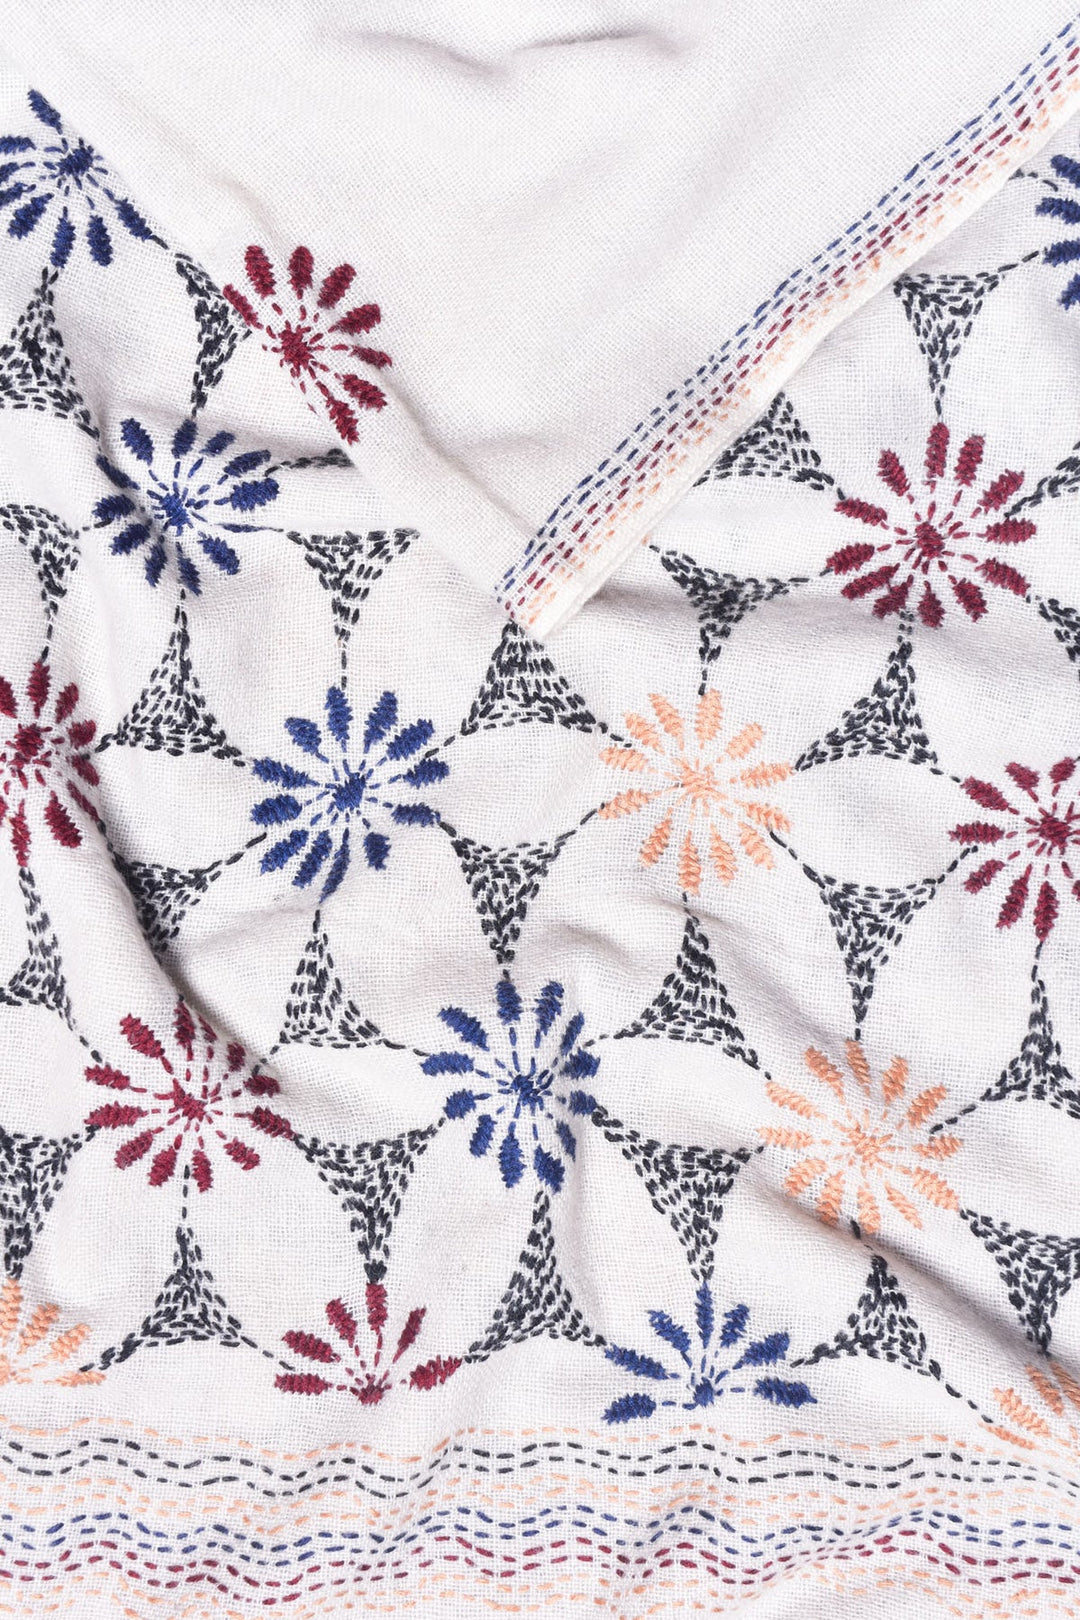 Floral Embroidered Cashmere Stole | Yudelle Handwoven Soft Cashmere Stole - Multi Color